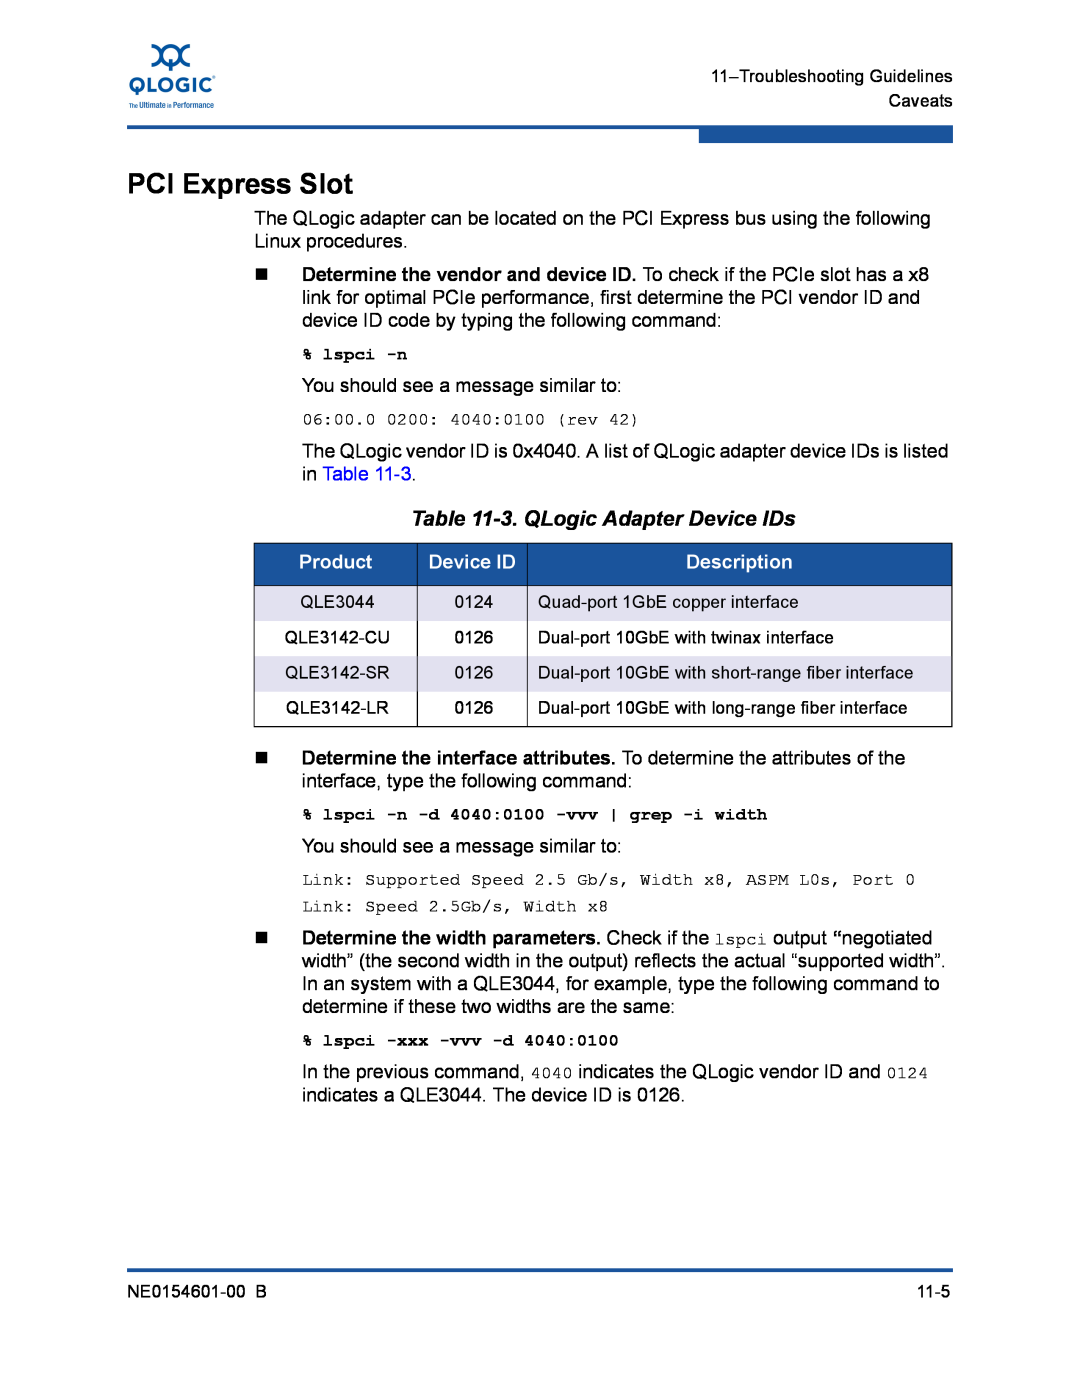 Q-Logic 3000, 3100 manual PCI Express Slot, 3. QLogic Adapter Device IDs, Product, Description 